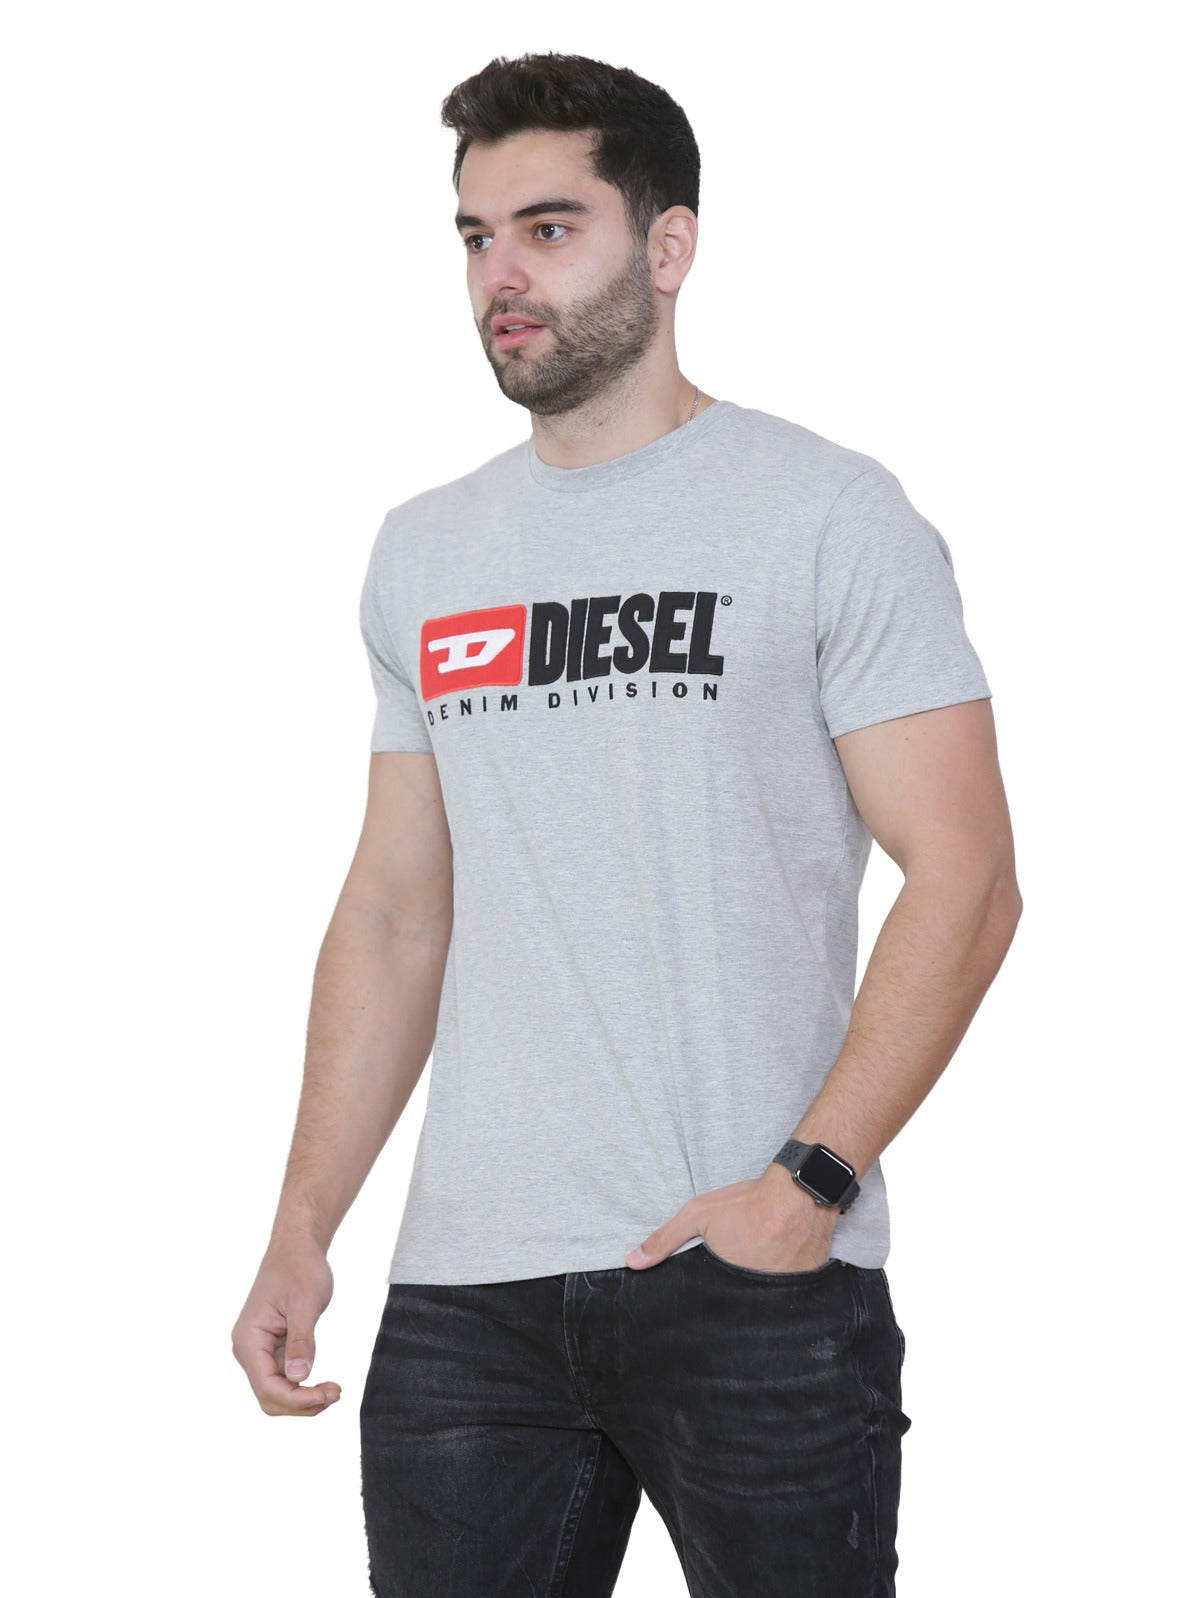 DIESEL DIVI Diesel Mens Short Sleeve T Shirt | T-Diego Division DIESEL RAWDENIM